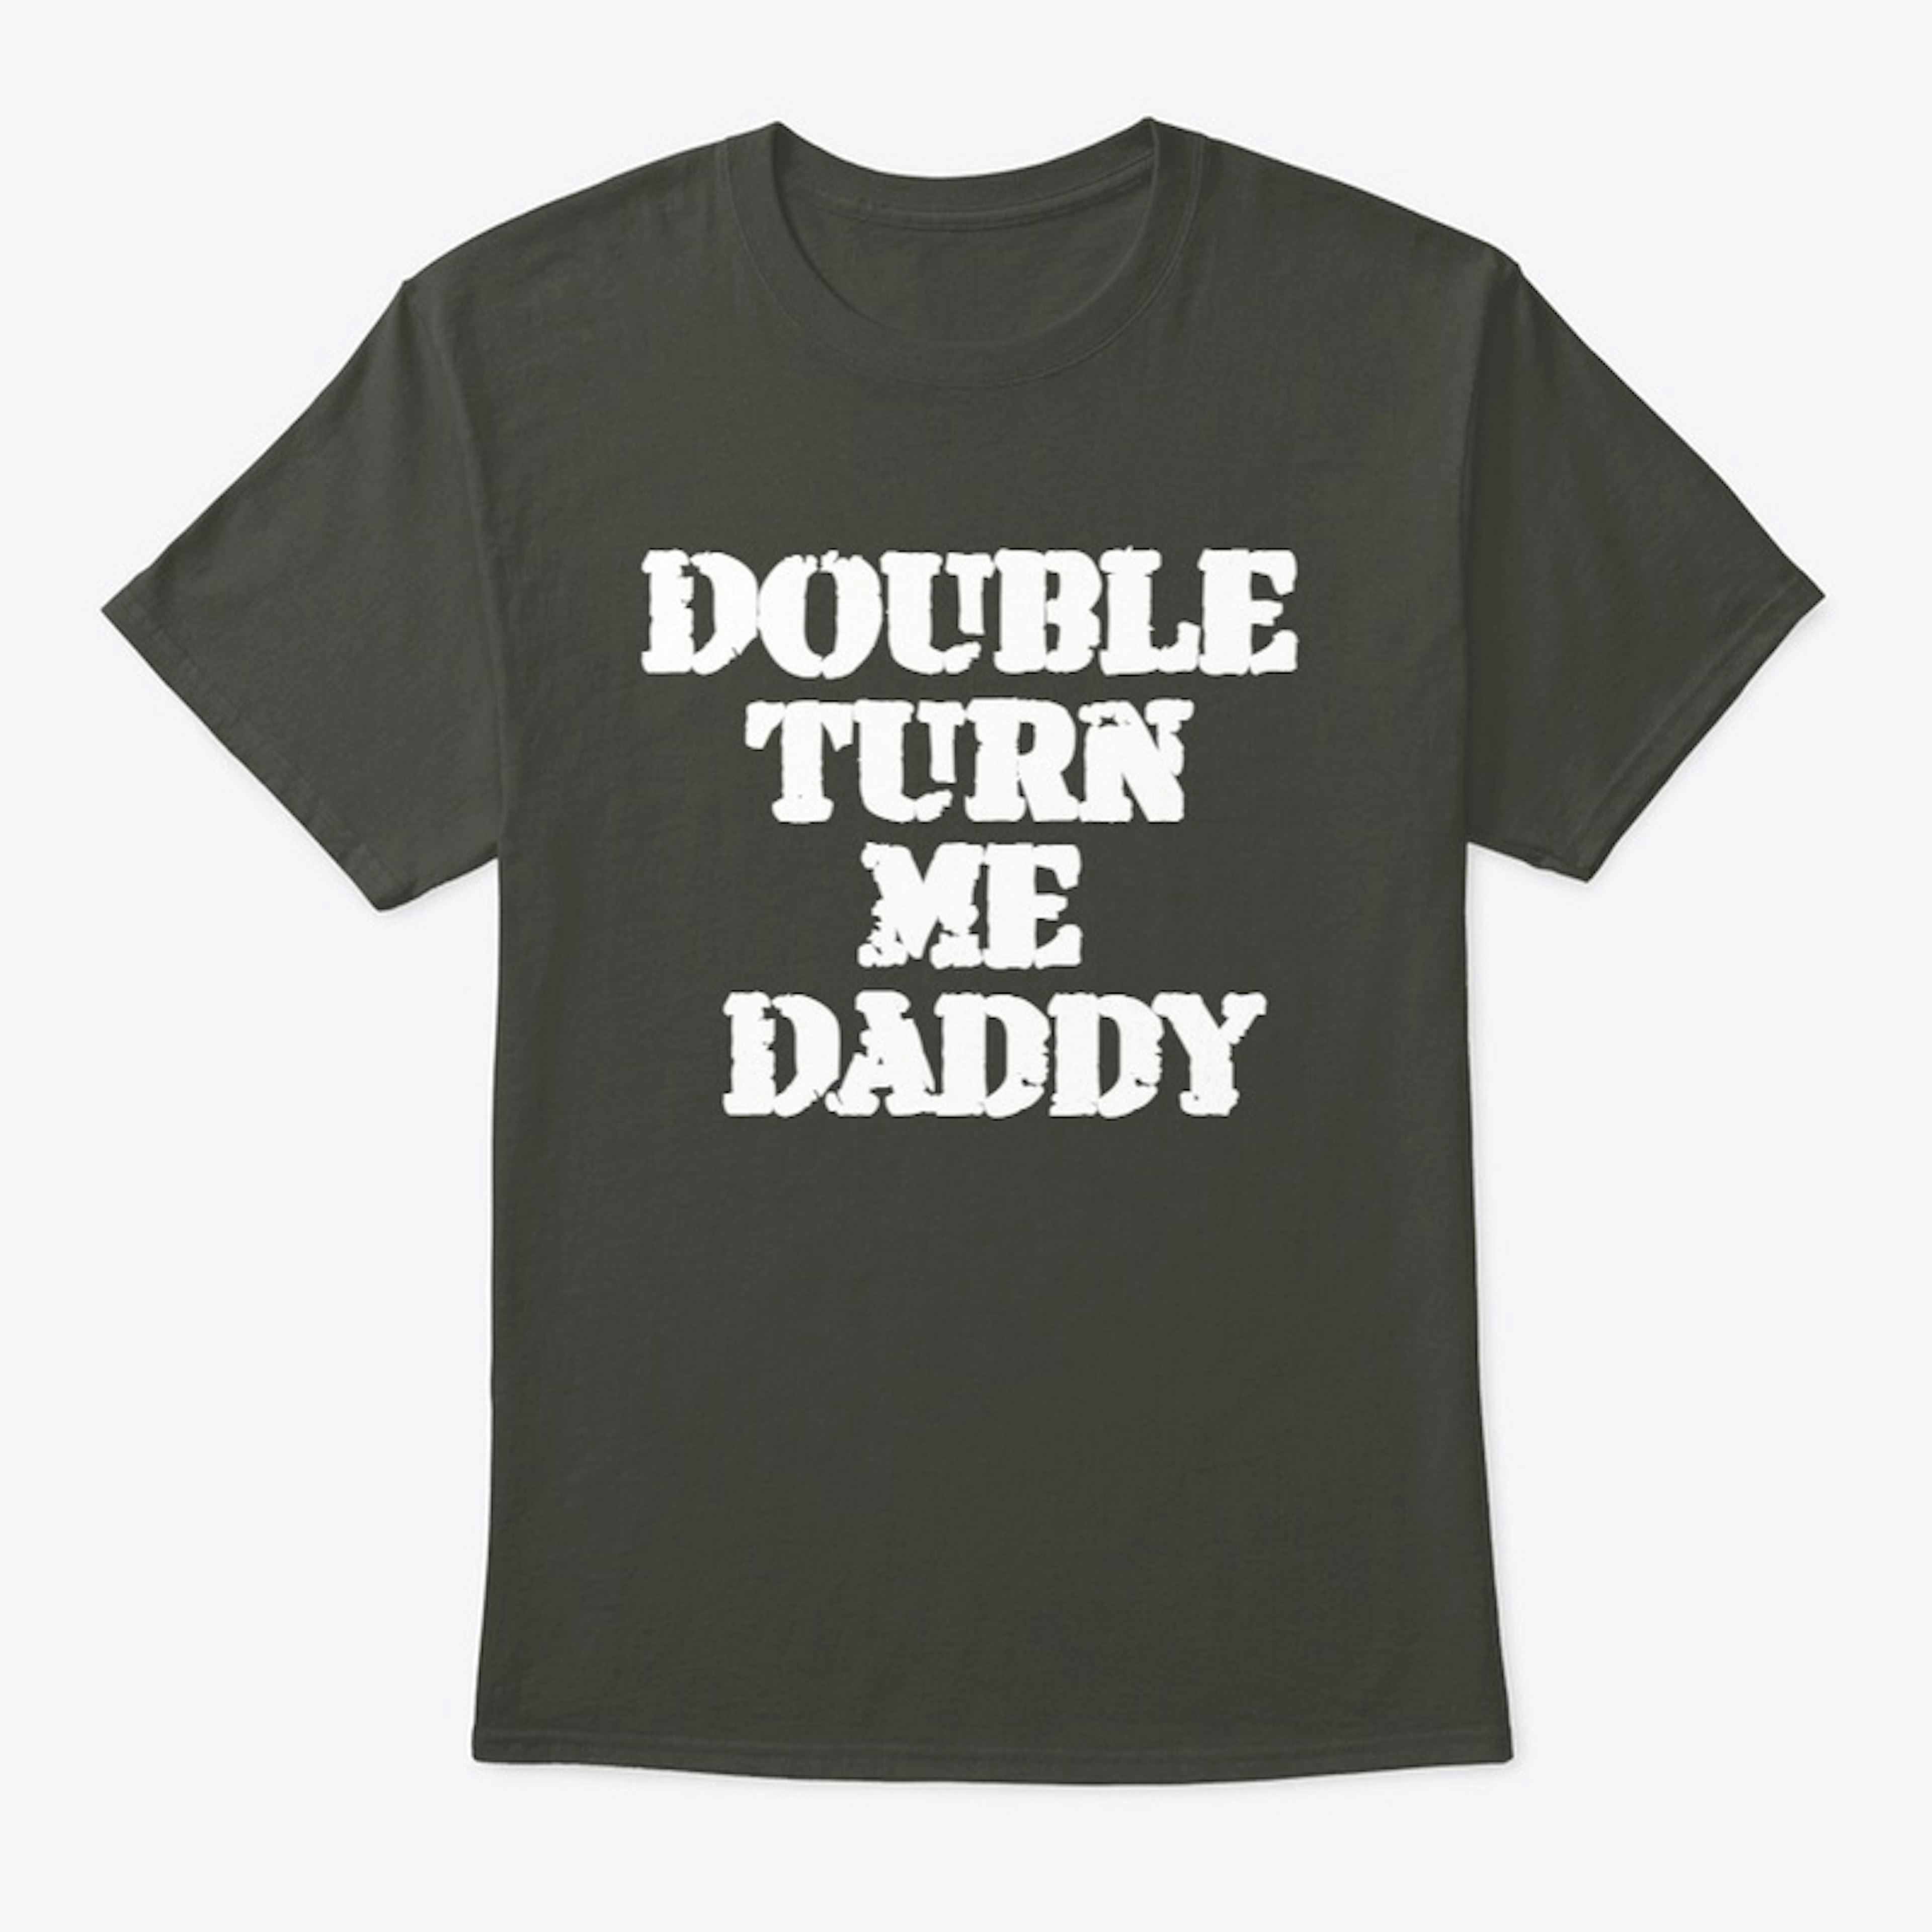 Double Turn me Daddy Tee